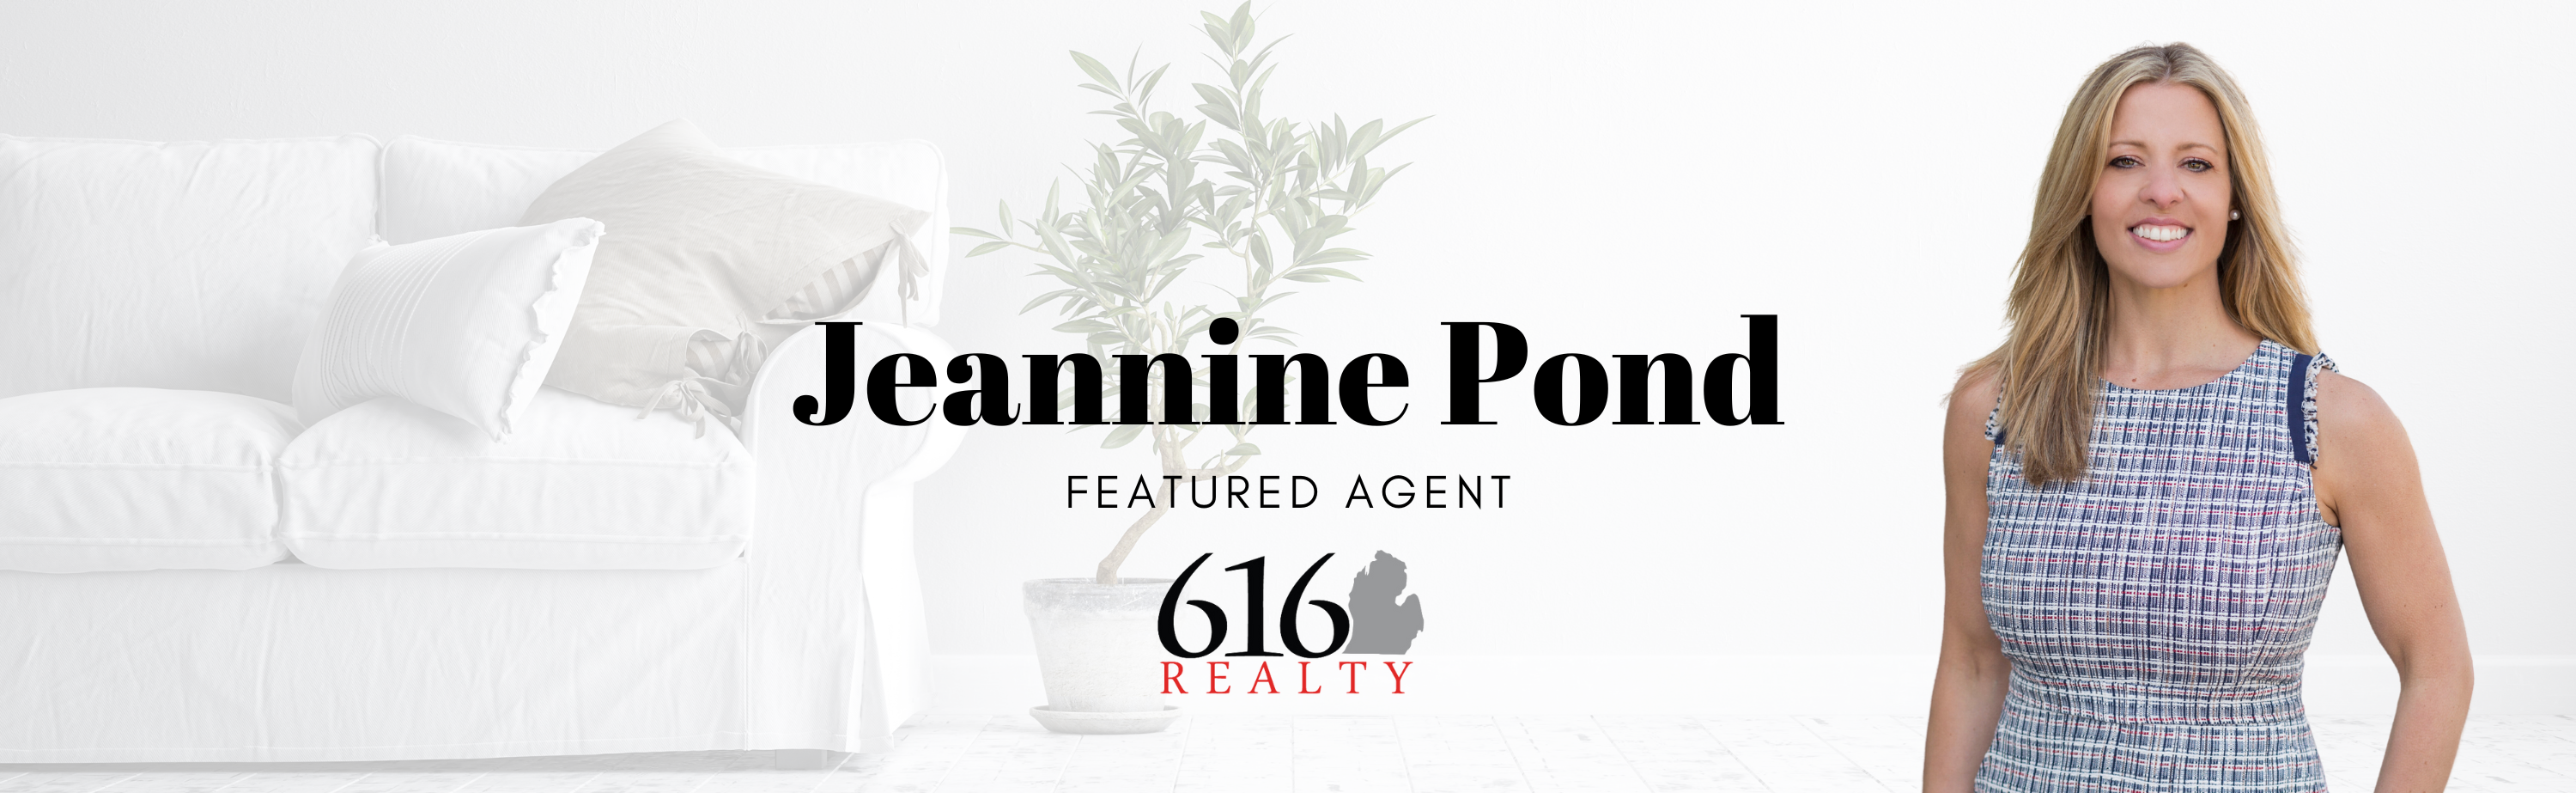 Jeannine Pond - Featured Agent